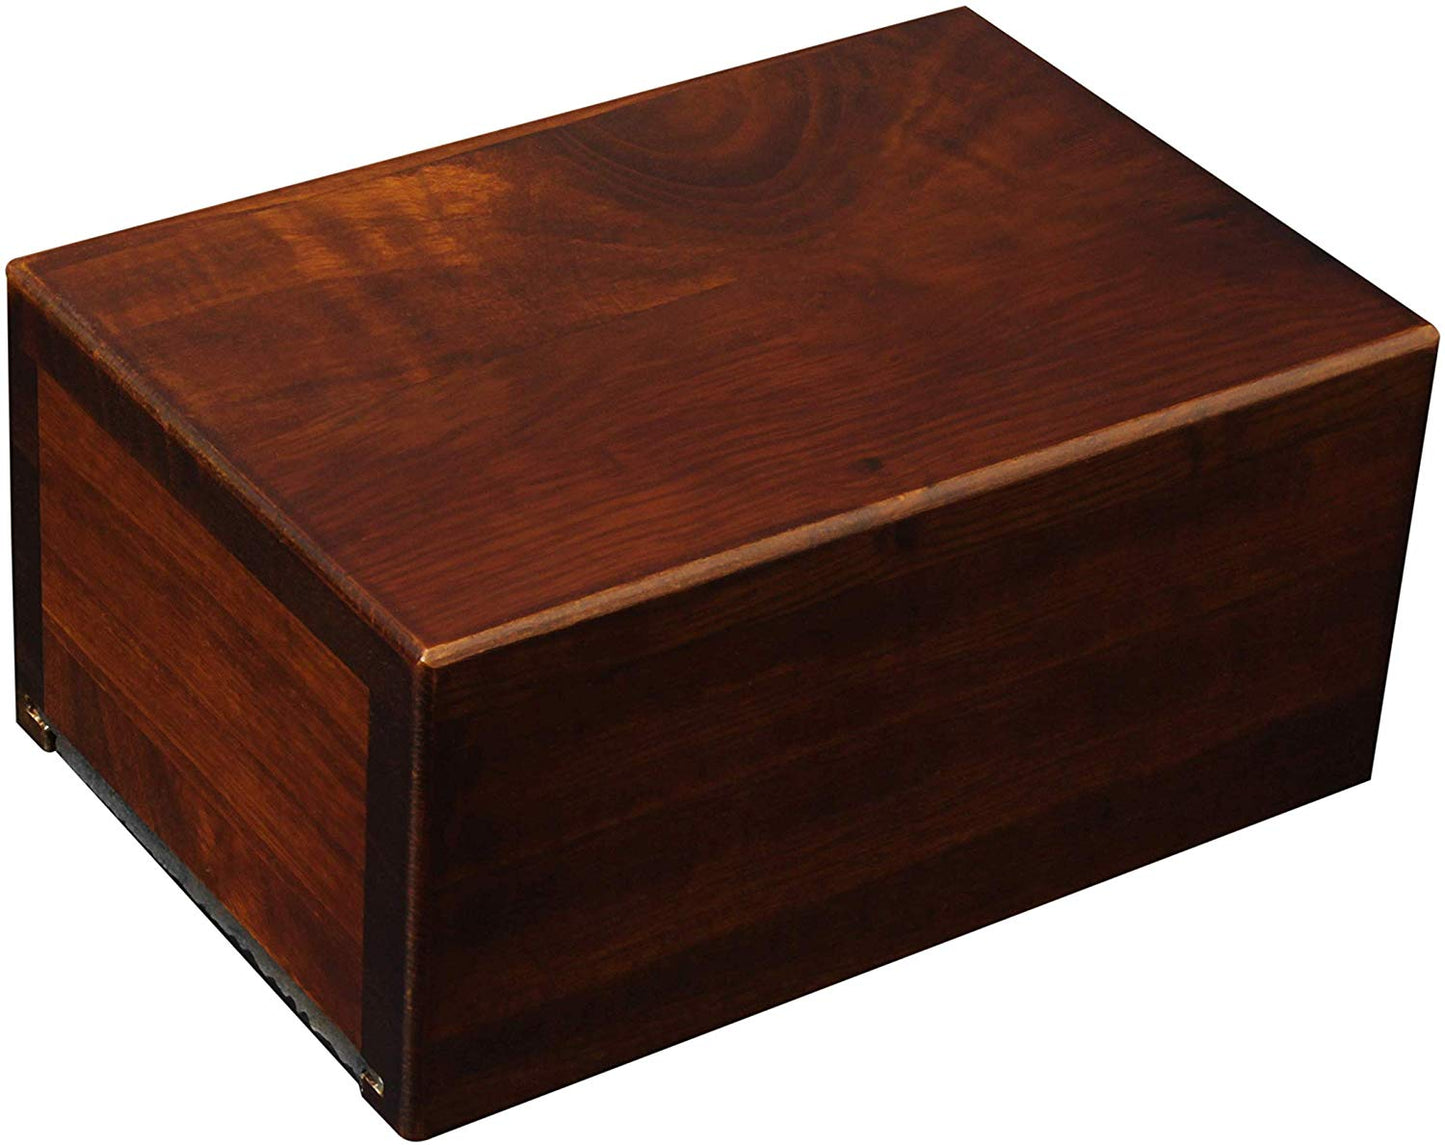 Small Economy Wooden Urn Box